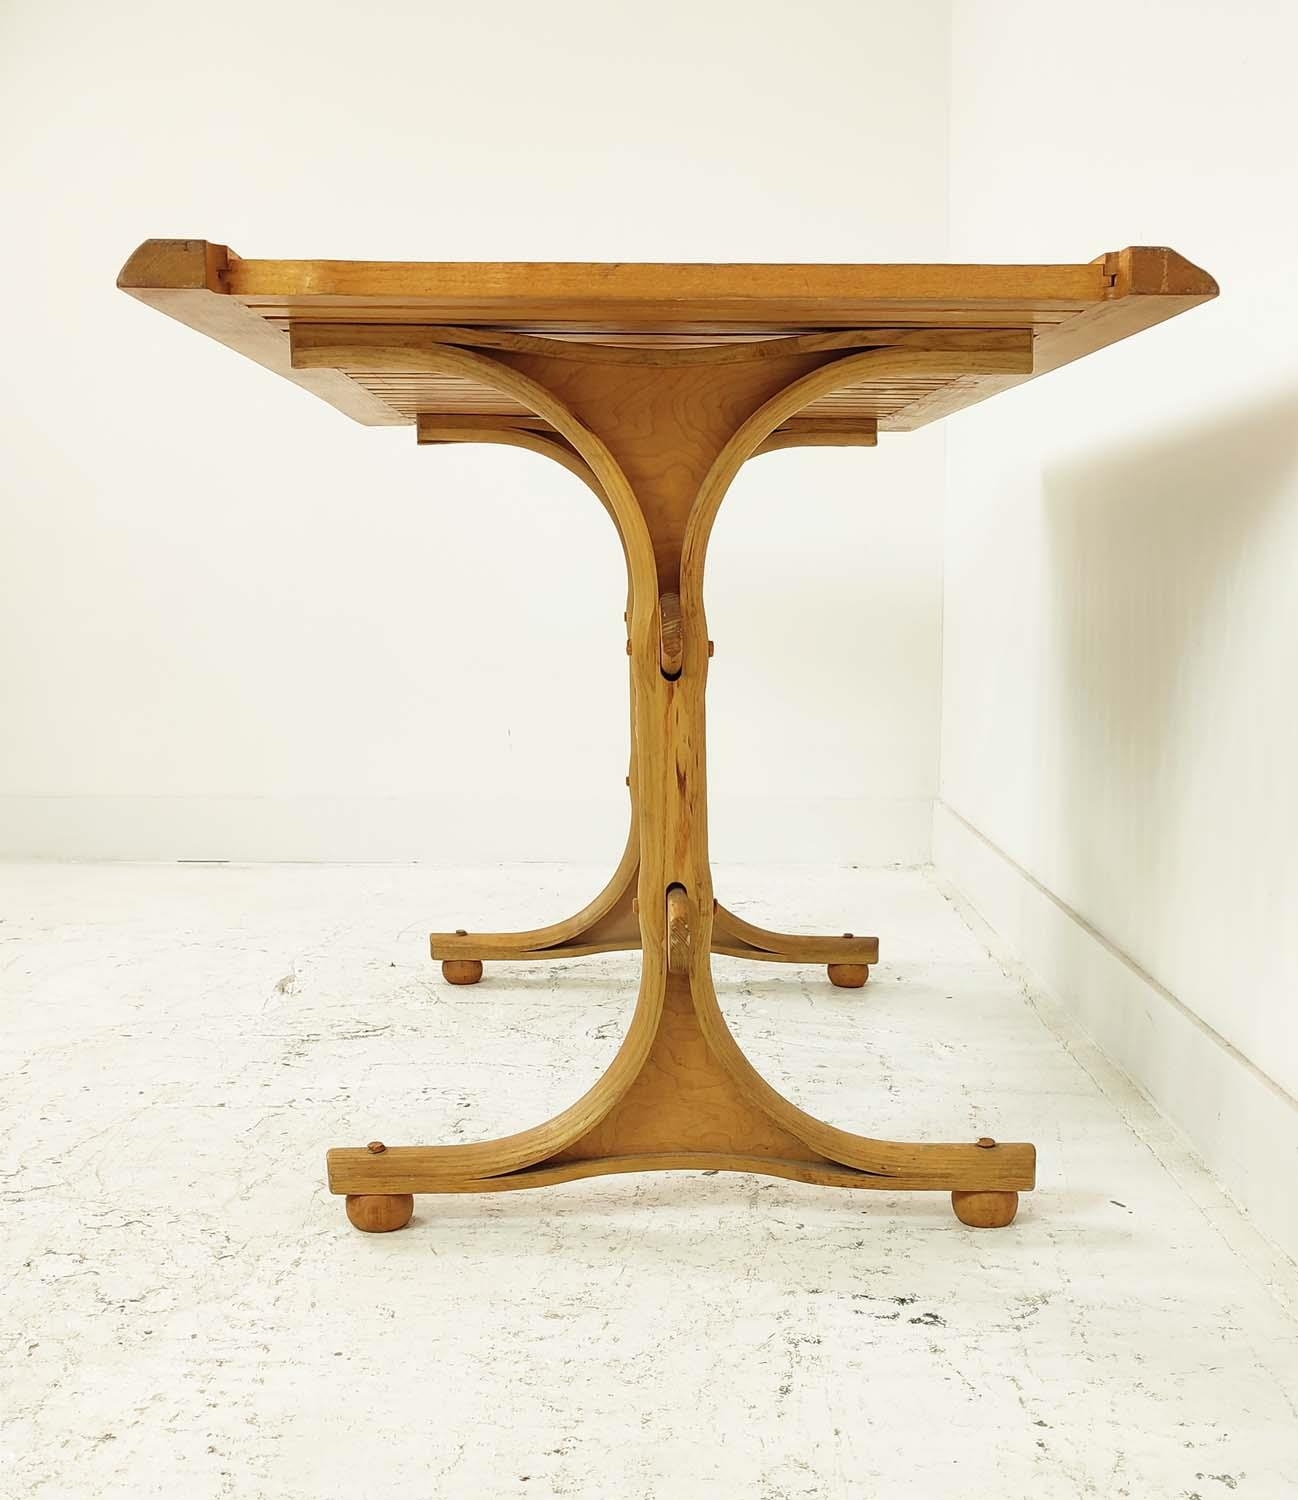 CENTRE TABLE, ash with slatted top, 75cm H x 116cm W x 73cm D. - Image 6 of 14